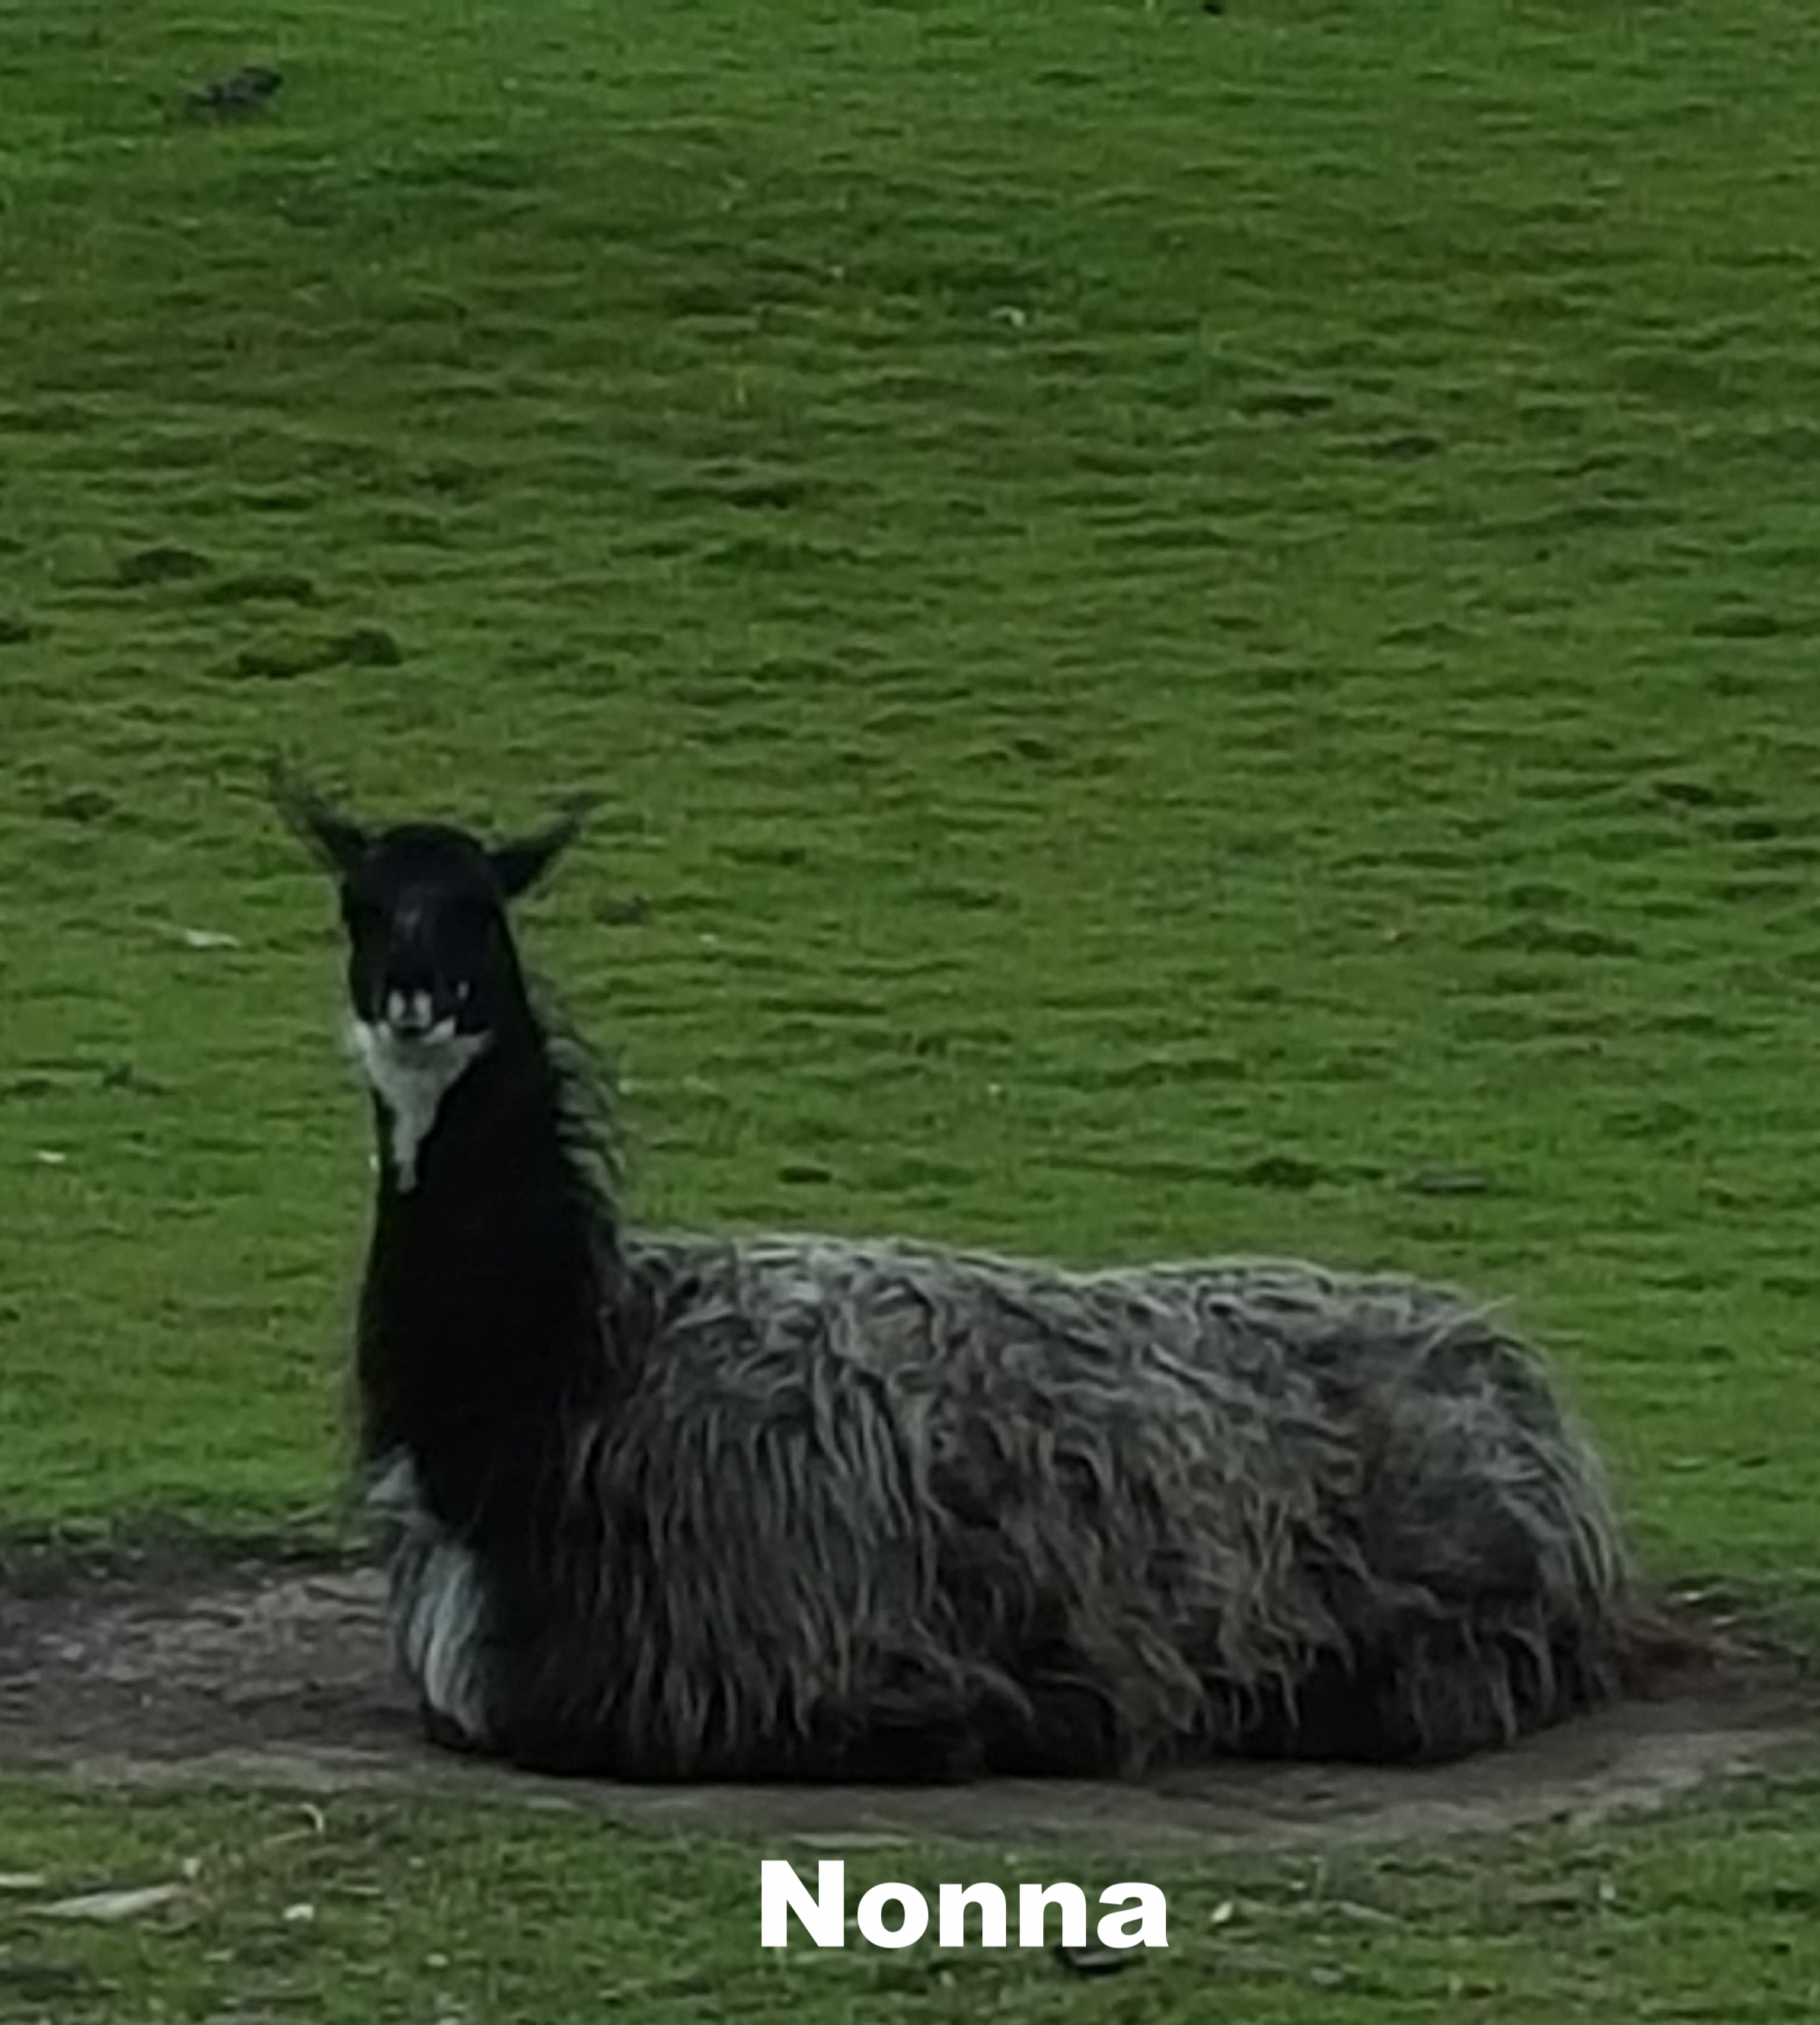 nonna the llama